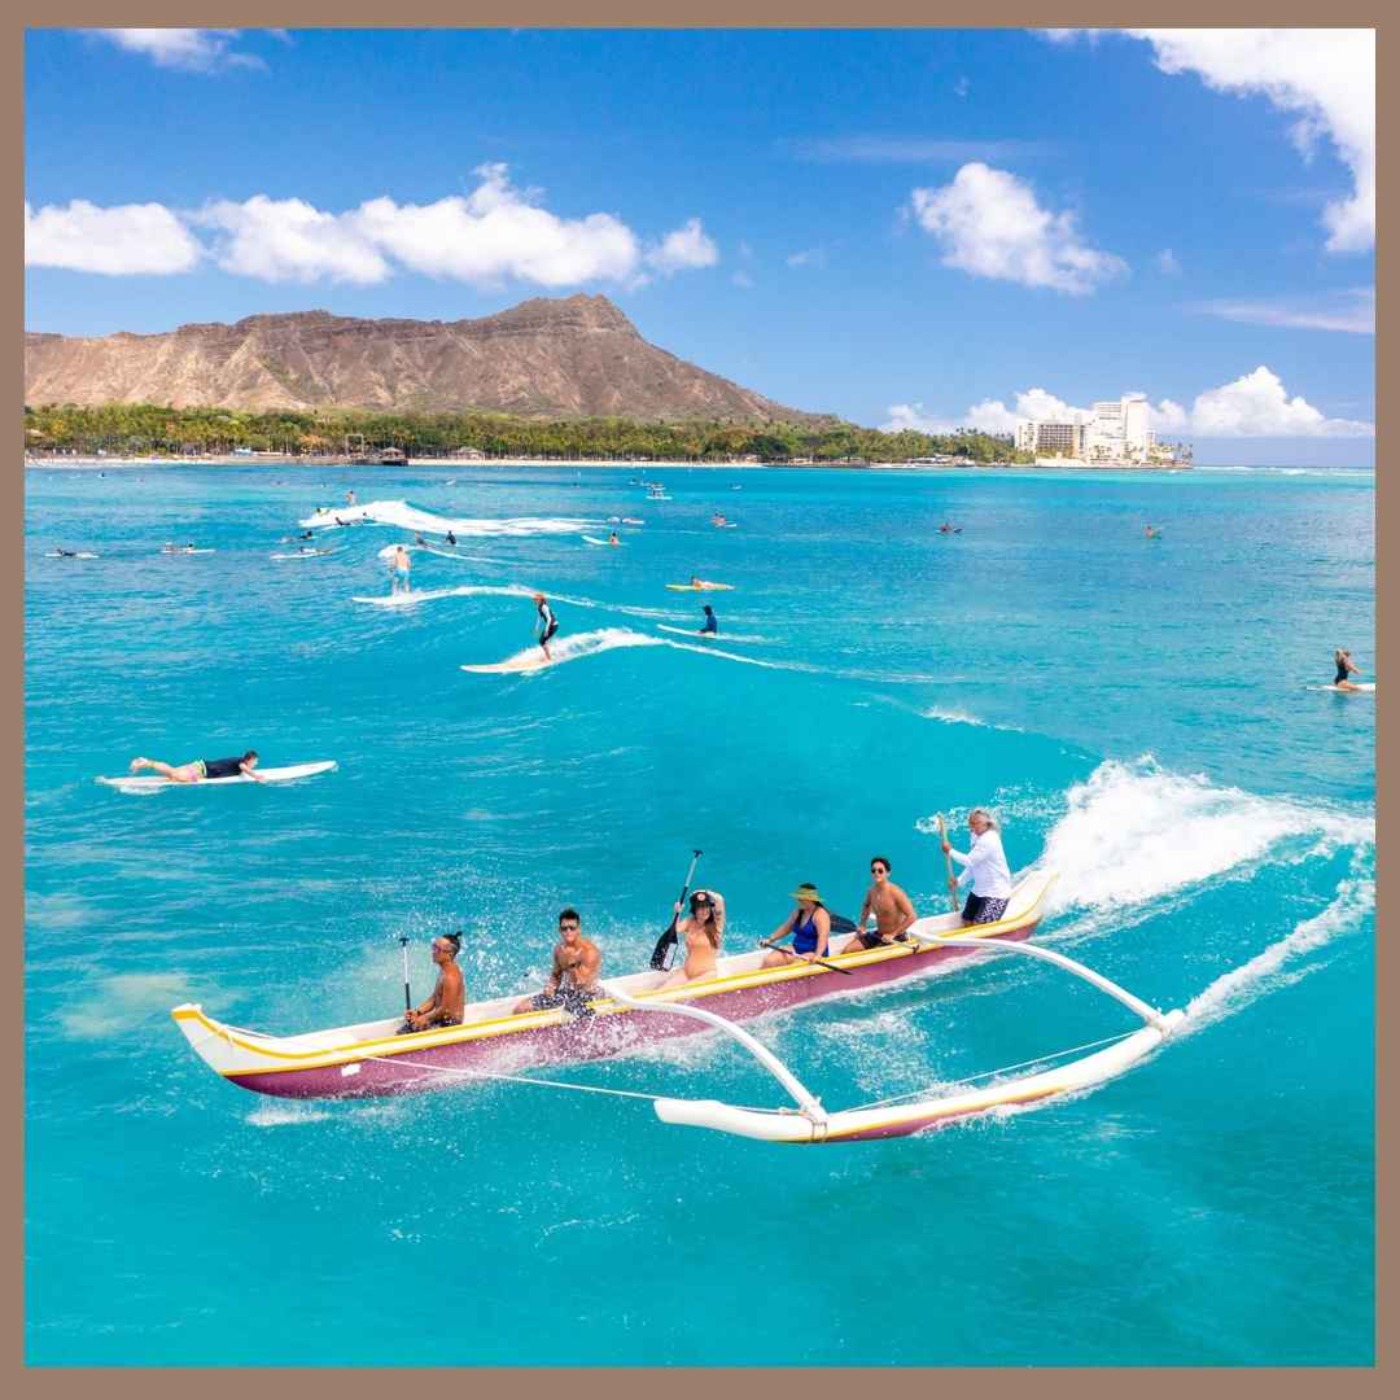 Debbie Stone - Outrigger Surfing Canoe Ride at Waikiki Beach